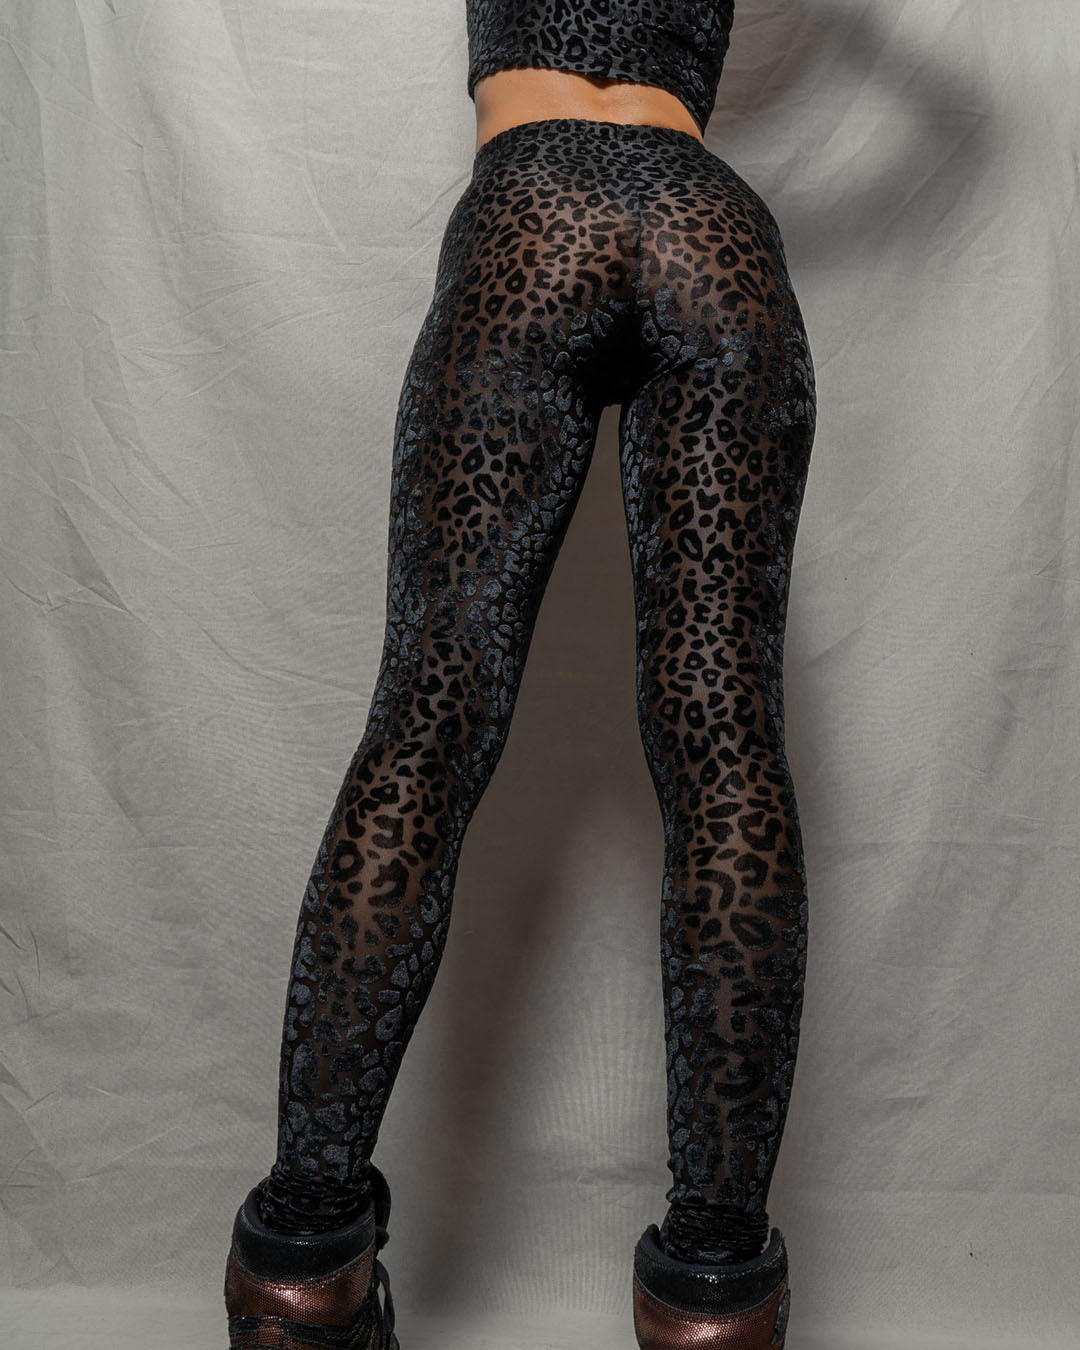 Louis Vuitton LV Map leopard pattern Tank Top, Legging • Kybershop